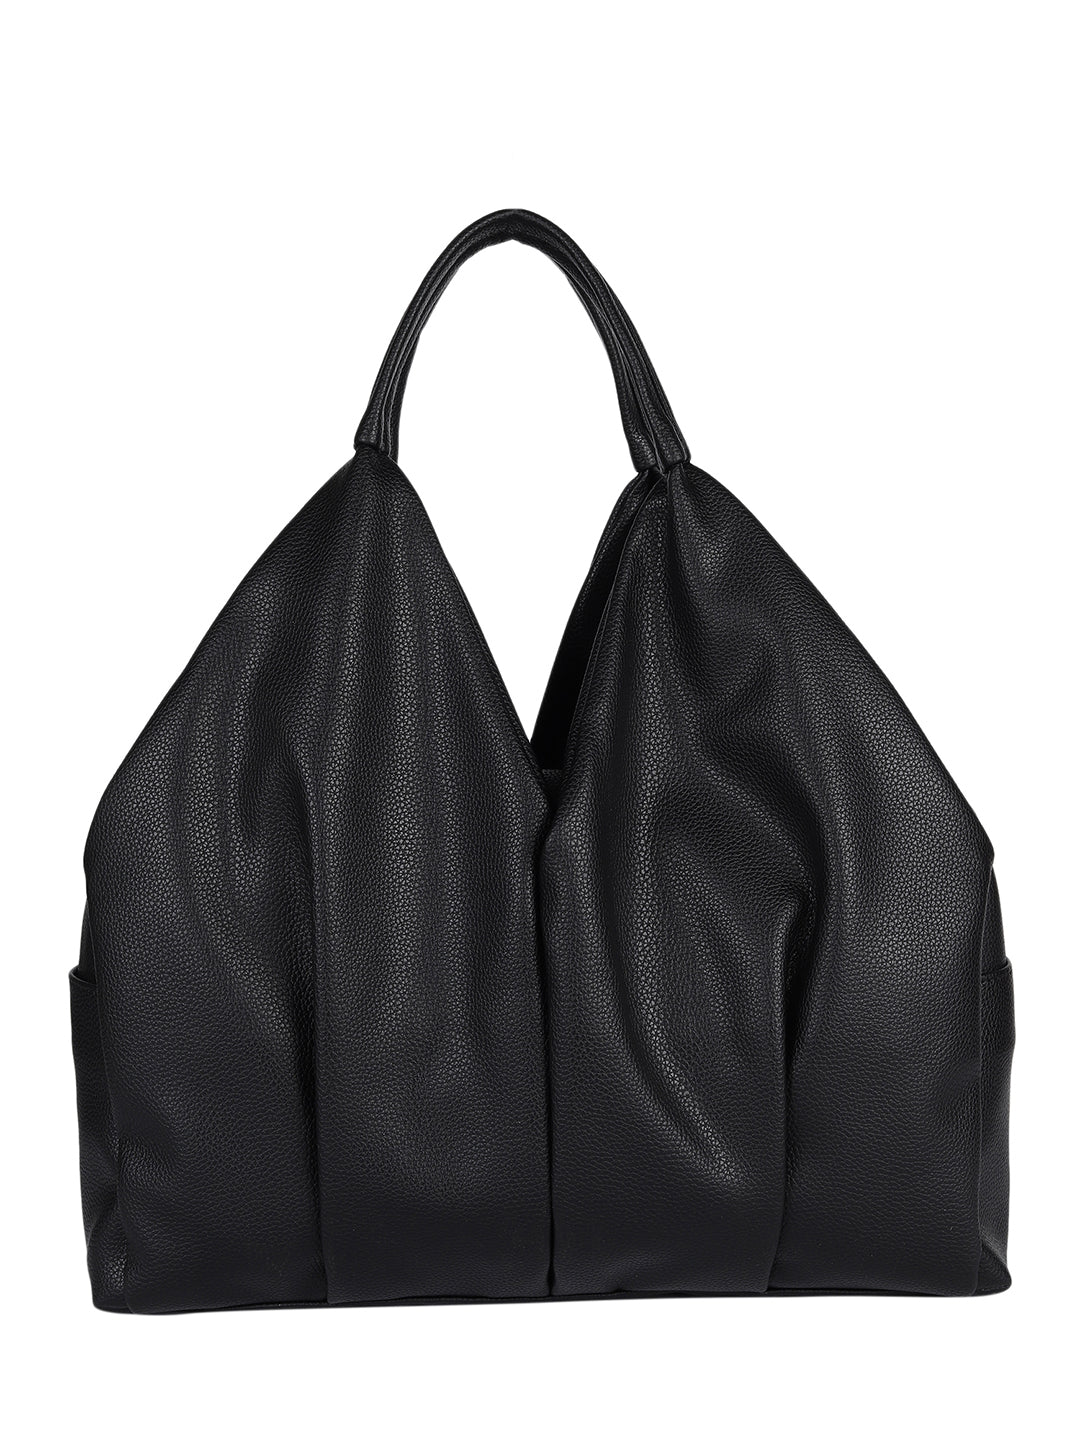 MINI WESST Black Solid Handheld Bag(MWTB112BL)